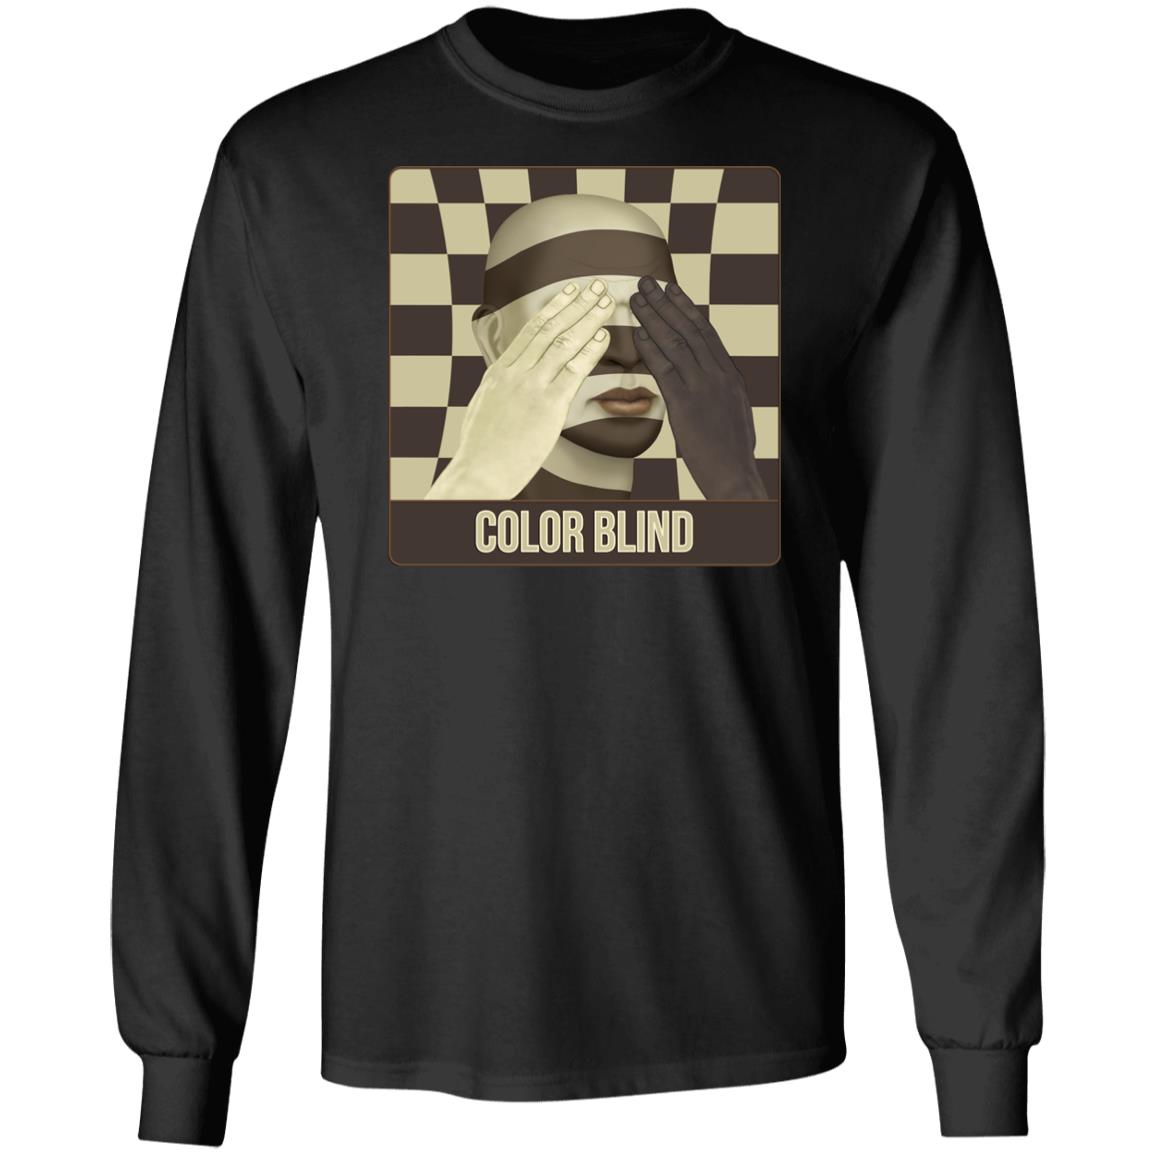 Color Blind - Men's Long Sleeve T-Shirt